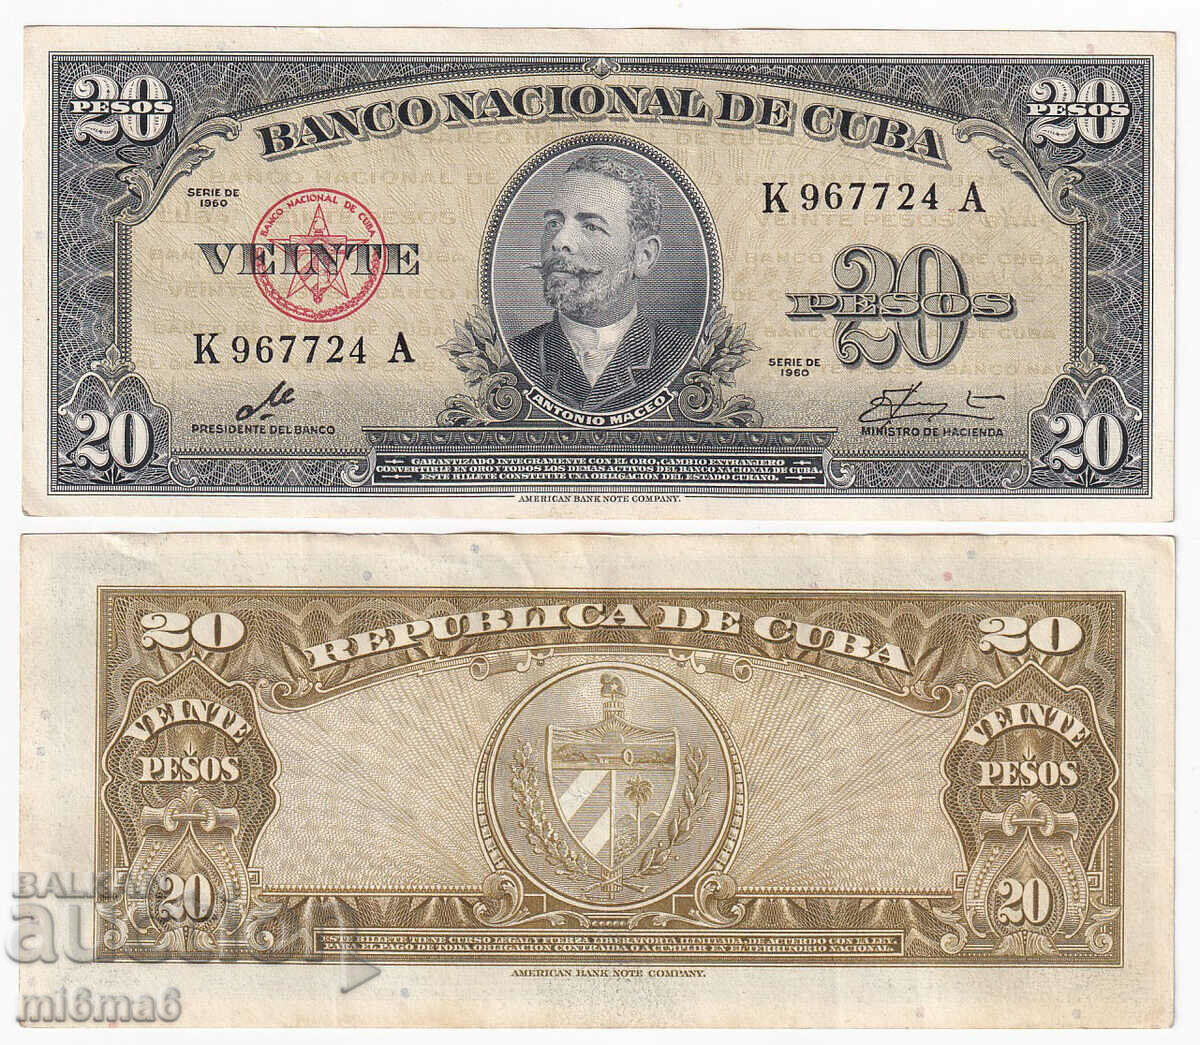 MI6MA6 - Cuba - Bancnota cu semnatura lui Che Guevara